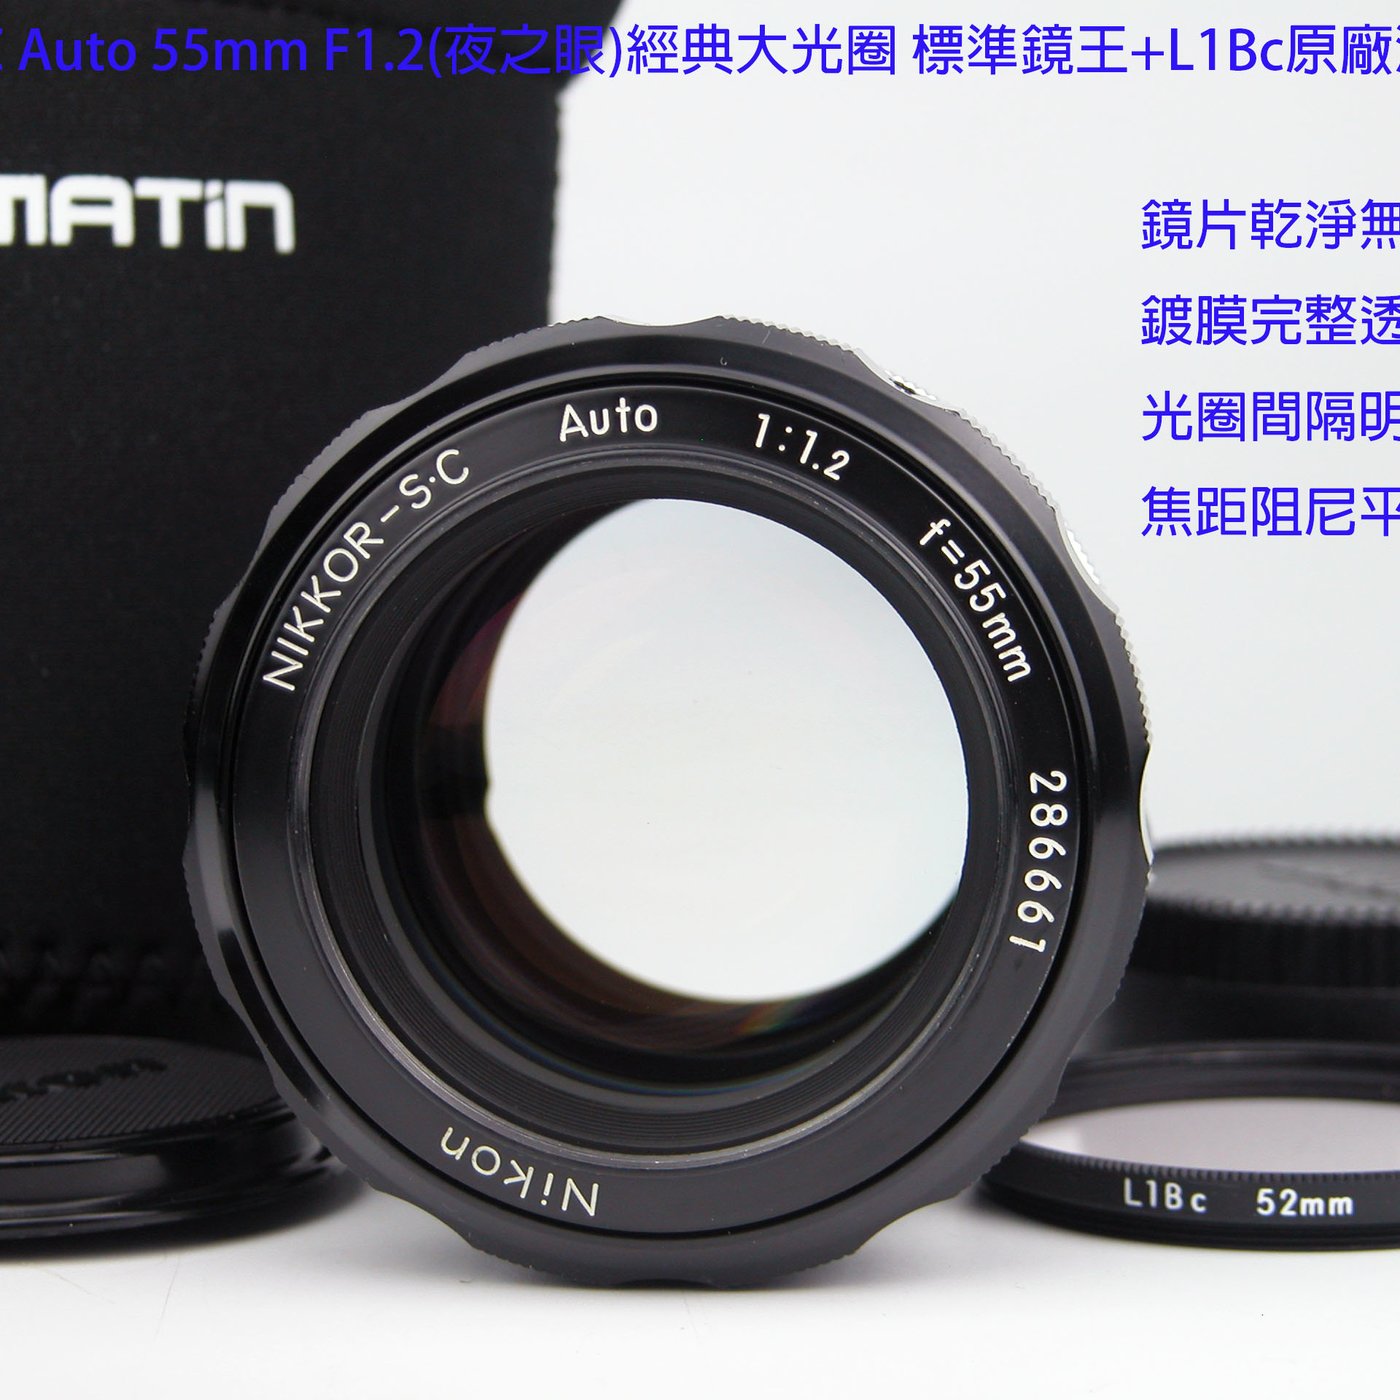 【C3331】Nikon NIKKOR-S・C Auto 55mm F1.2